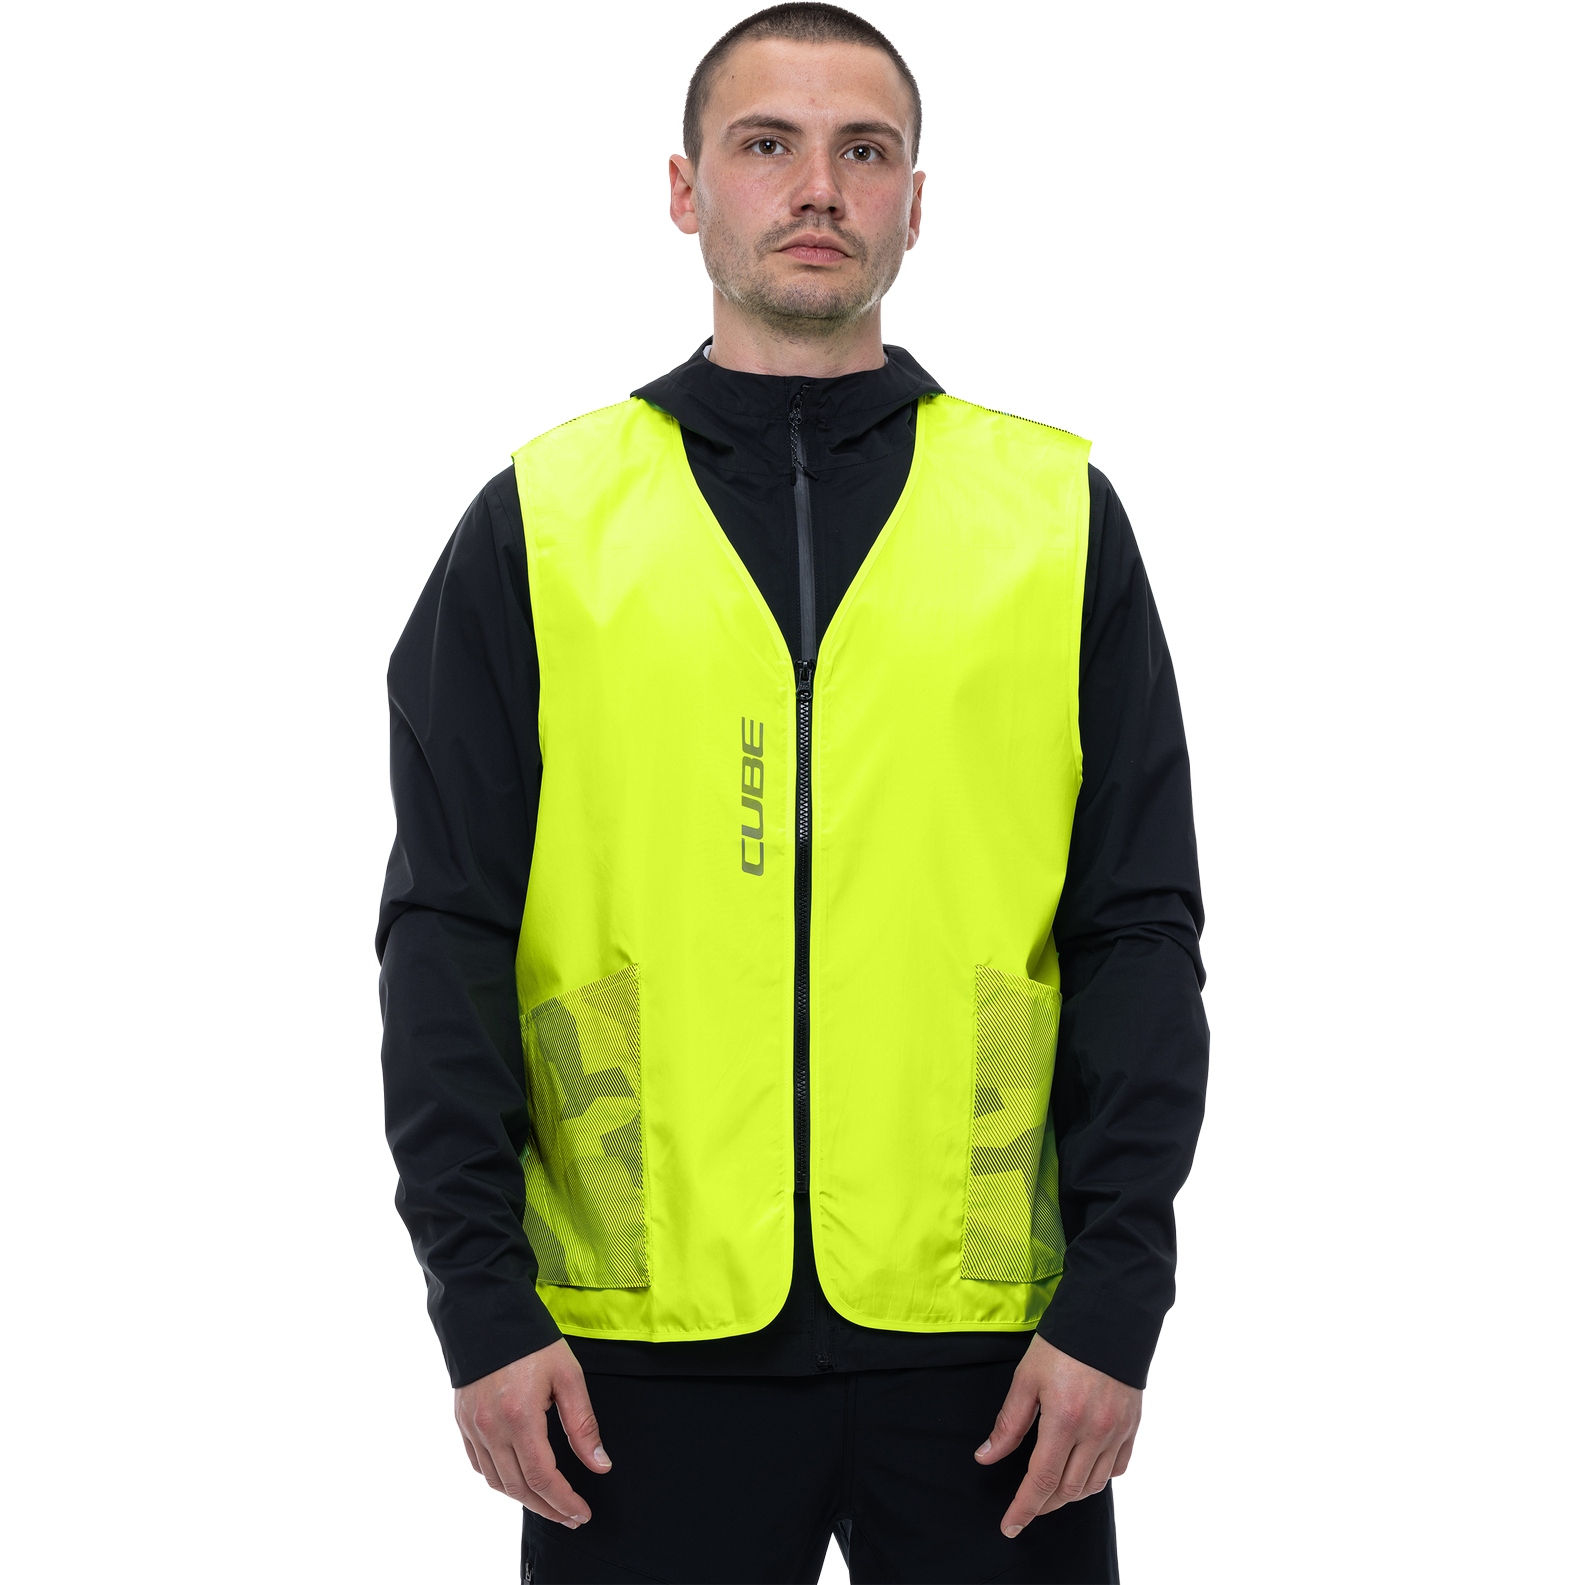 Productfoto van CUBE CMPT Safety Vest - neon yellow